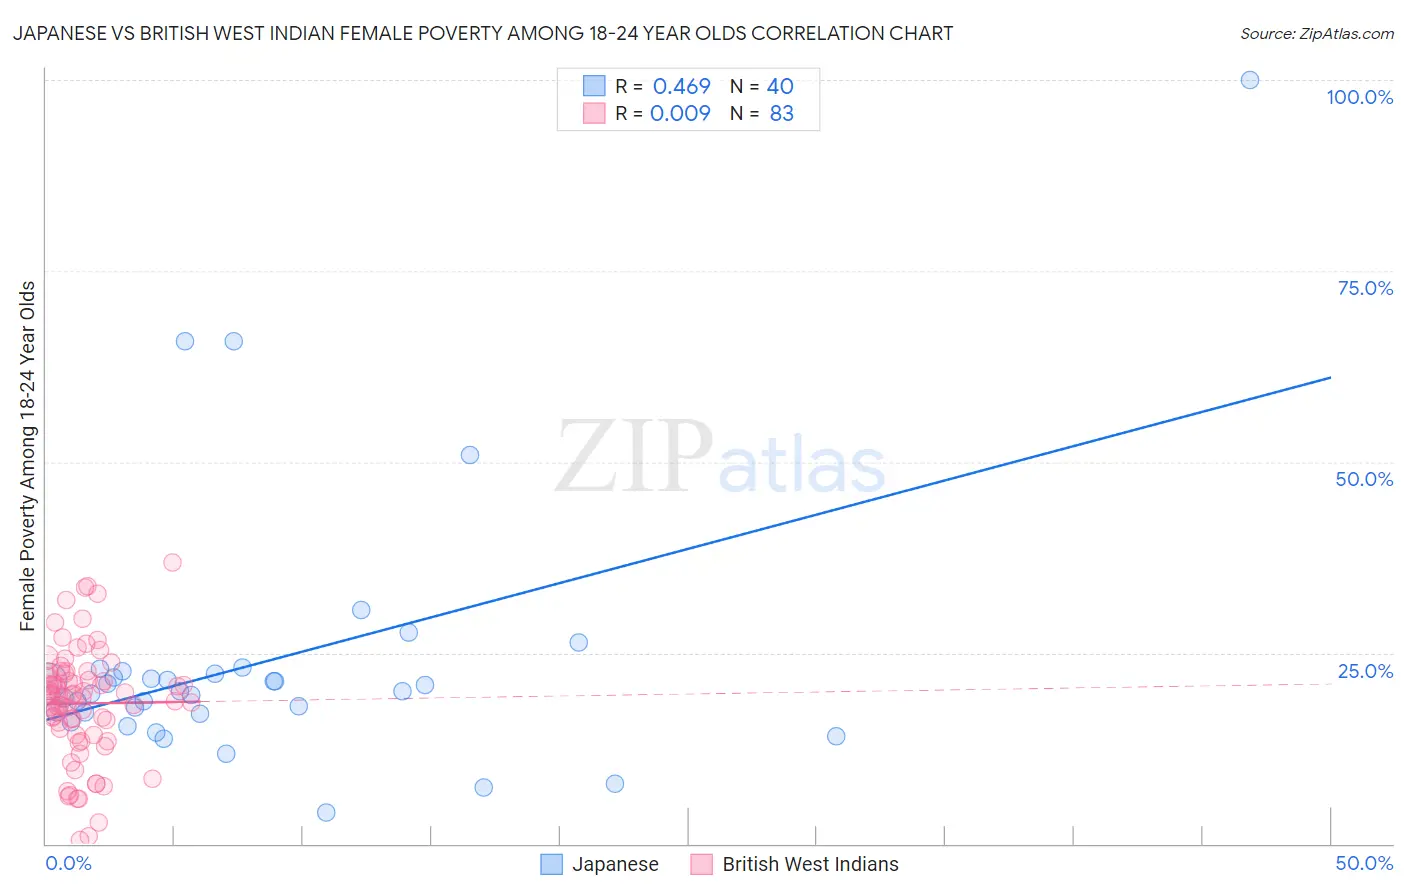 Japanese vs British West Indian Female Poverty Among 18-24 Year Olds